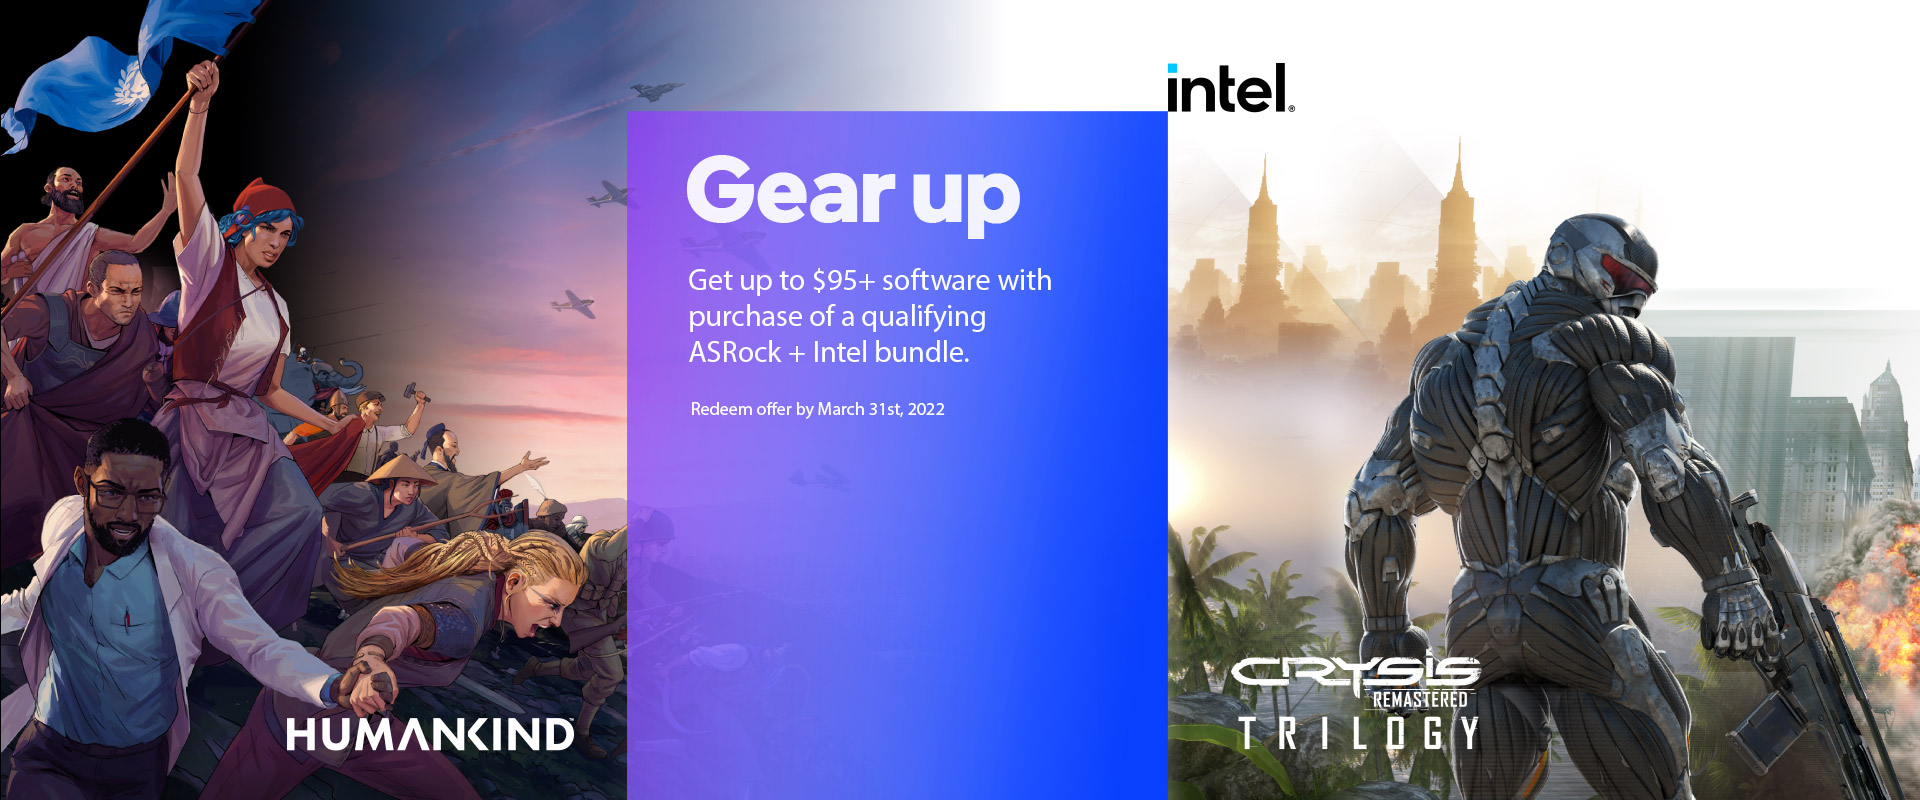 Intel Game Bundle Campaign